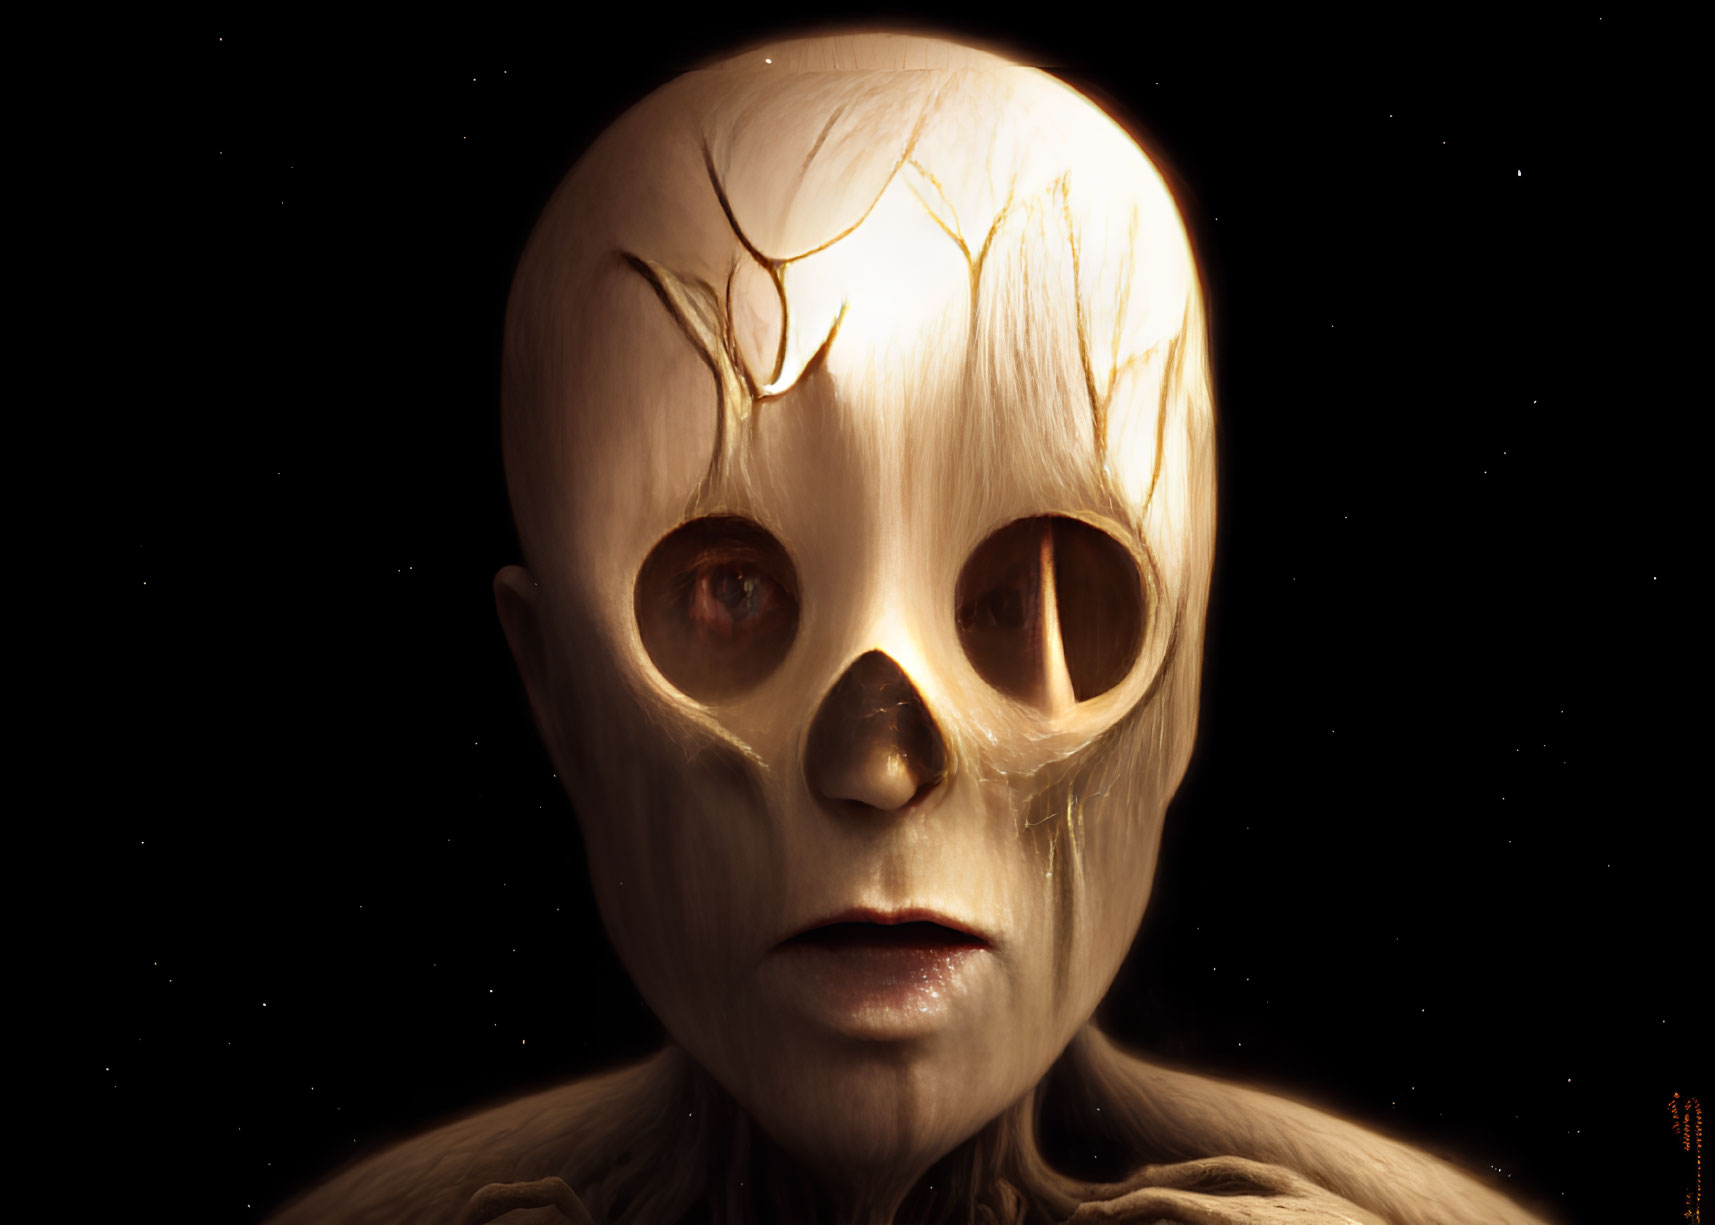 Digital artwork of humanoid figure with bald head and black eyes against black background